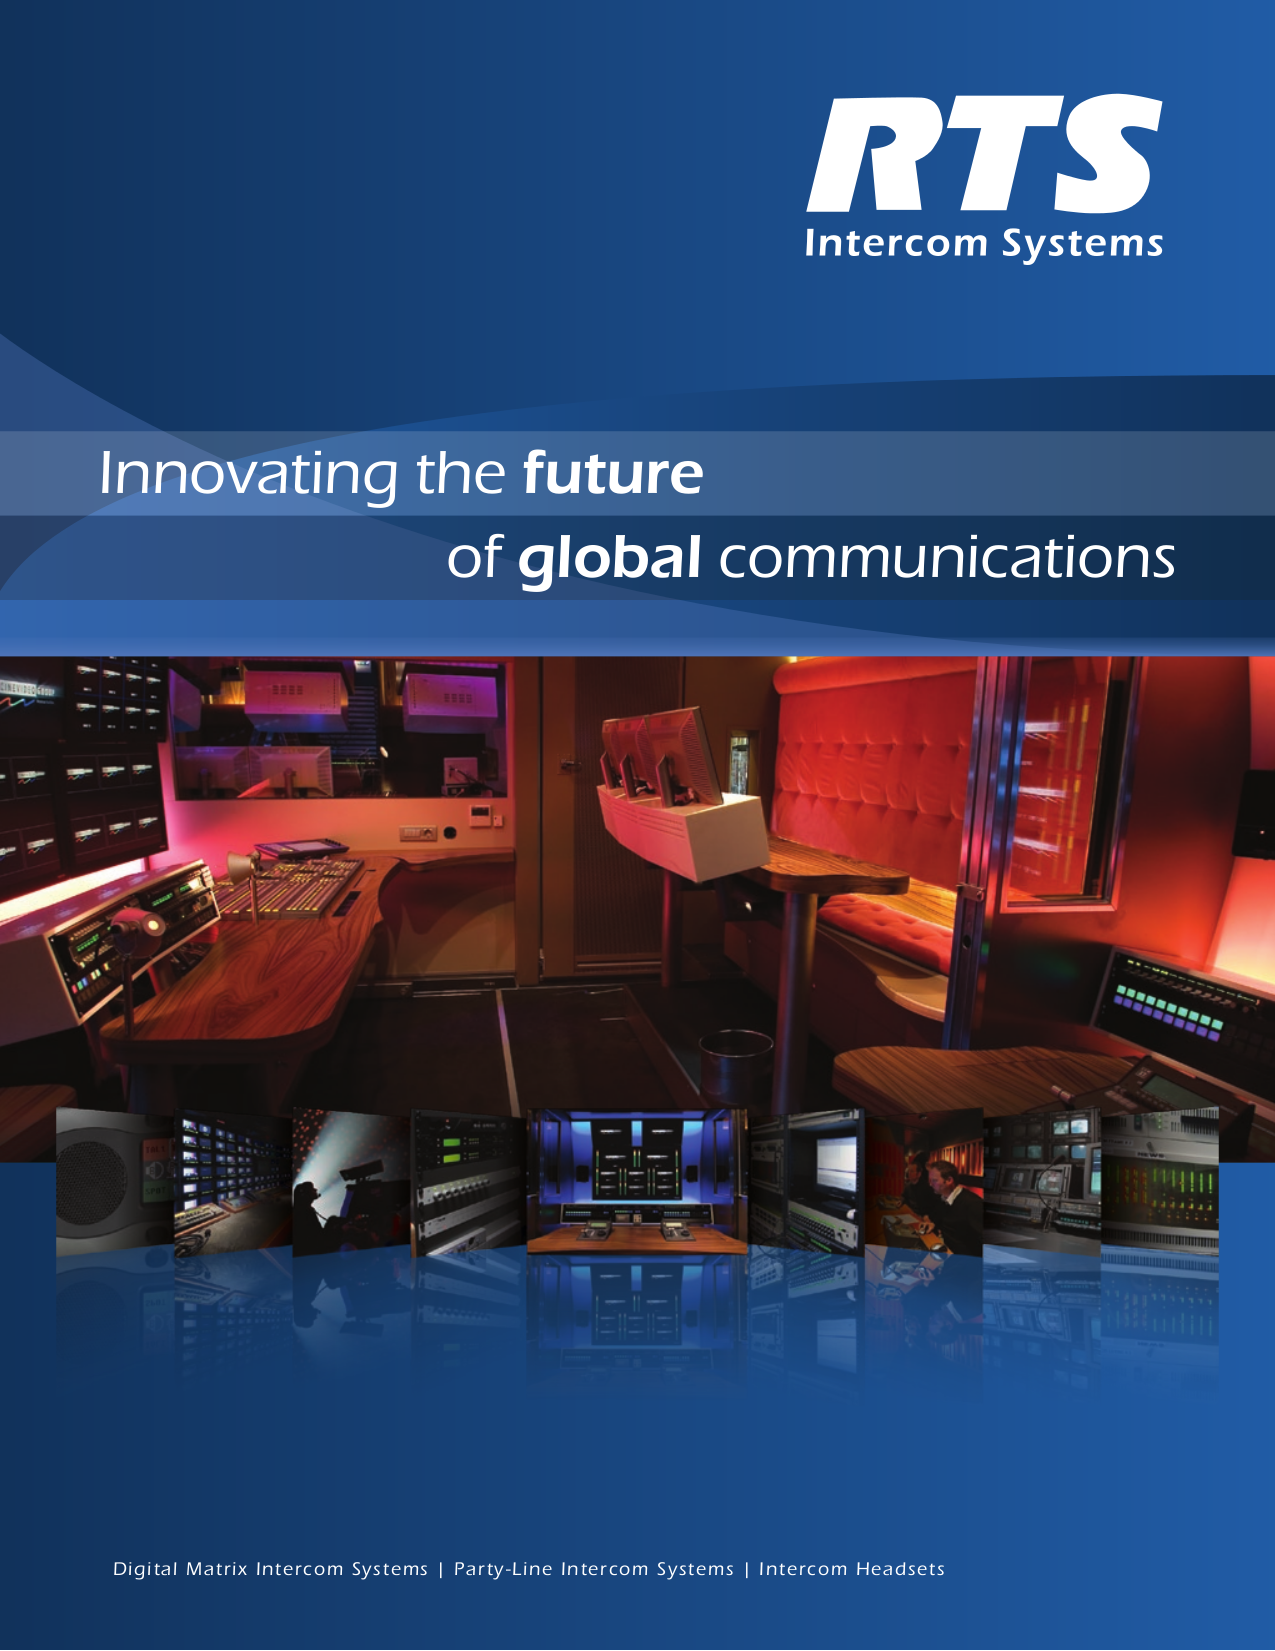 pdf for Telex Other Cronus IntercomSystem manual